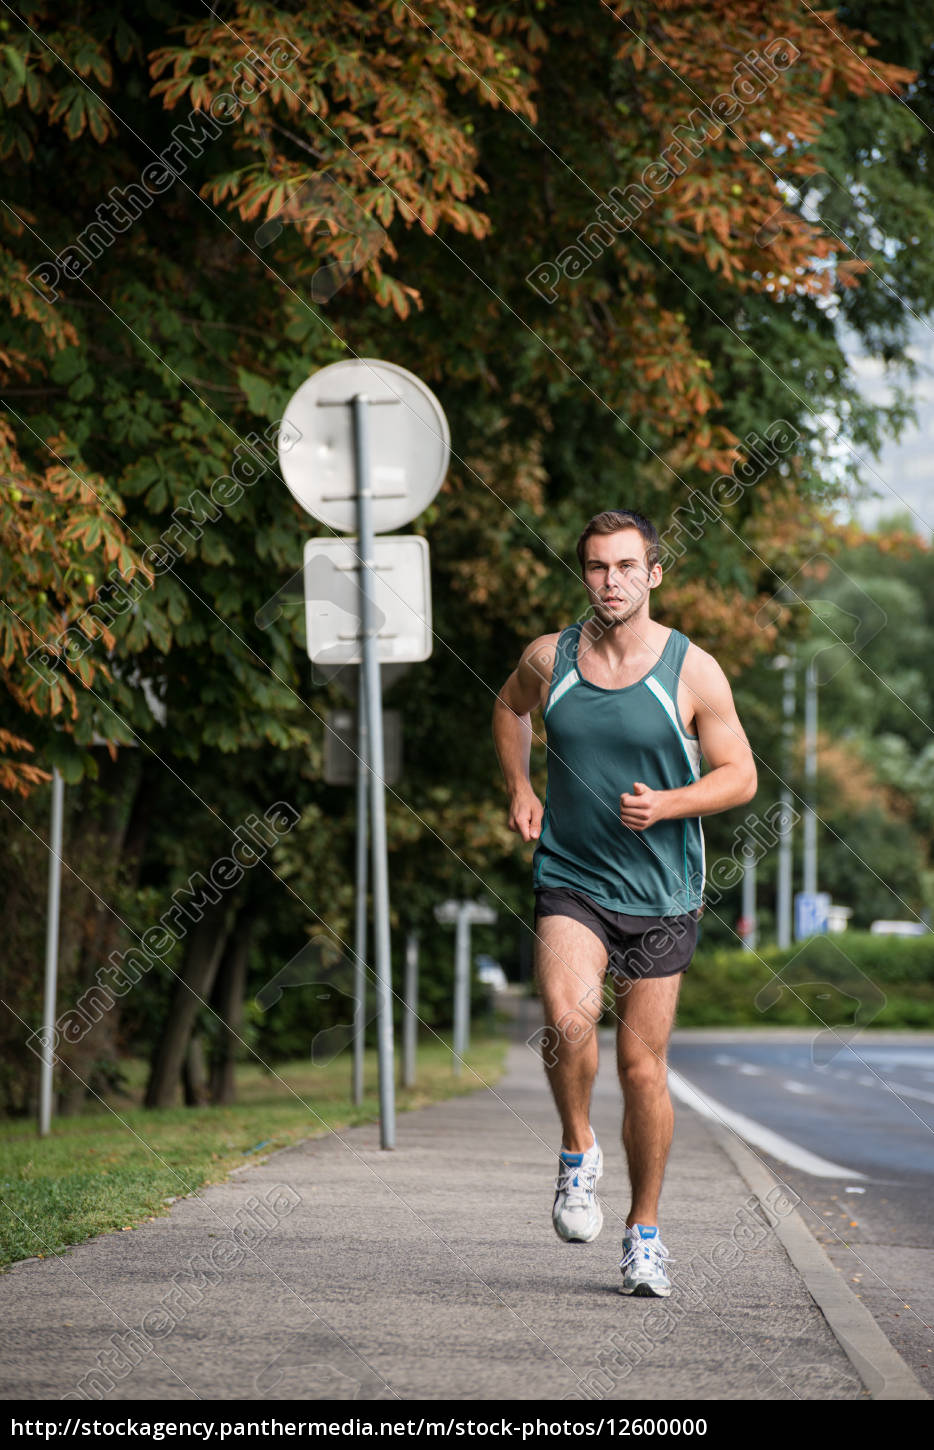 Treinamento - homem correndo na rua - Stockphoto #12600000